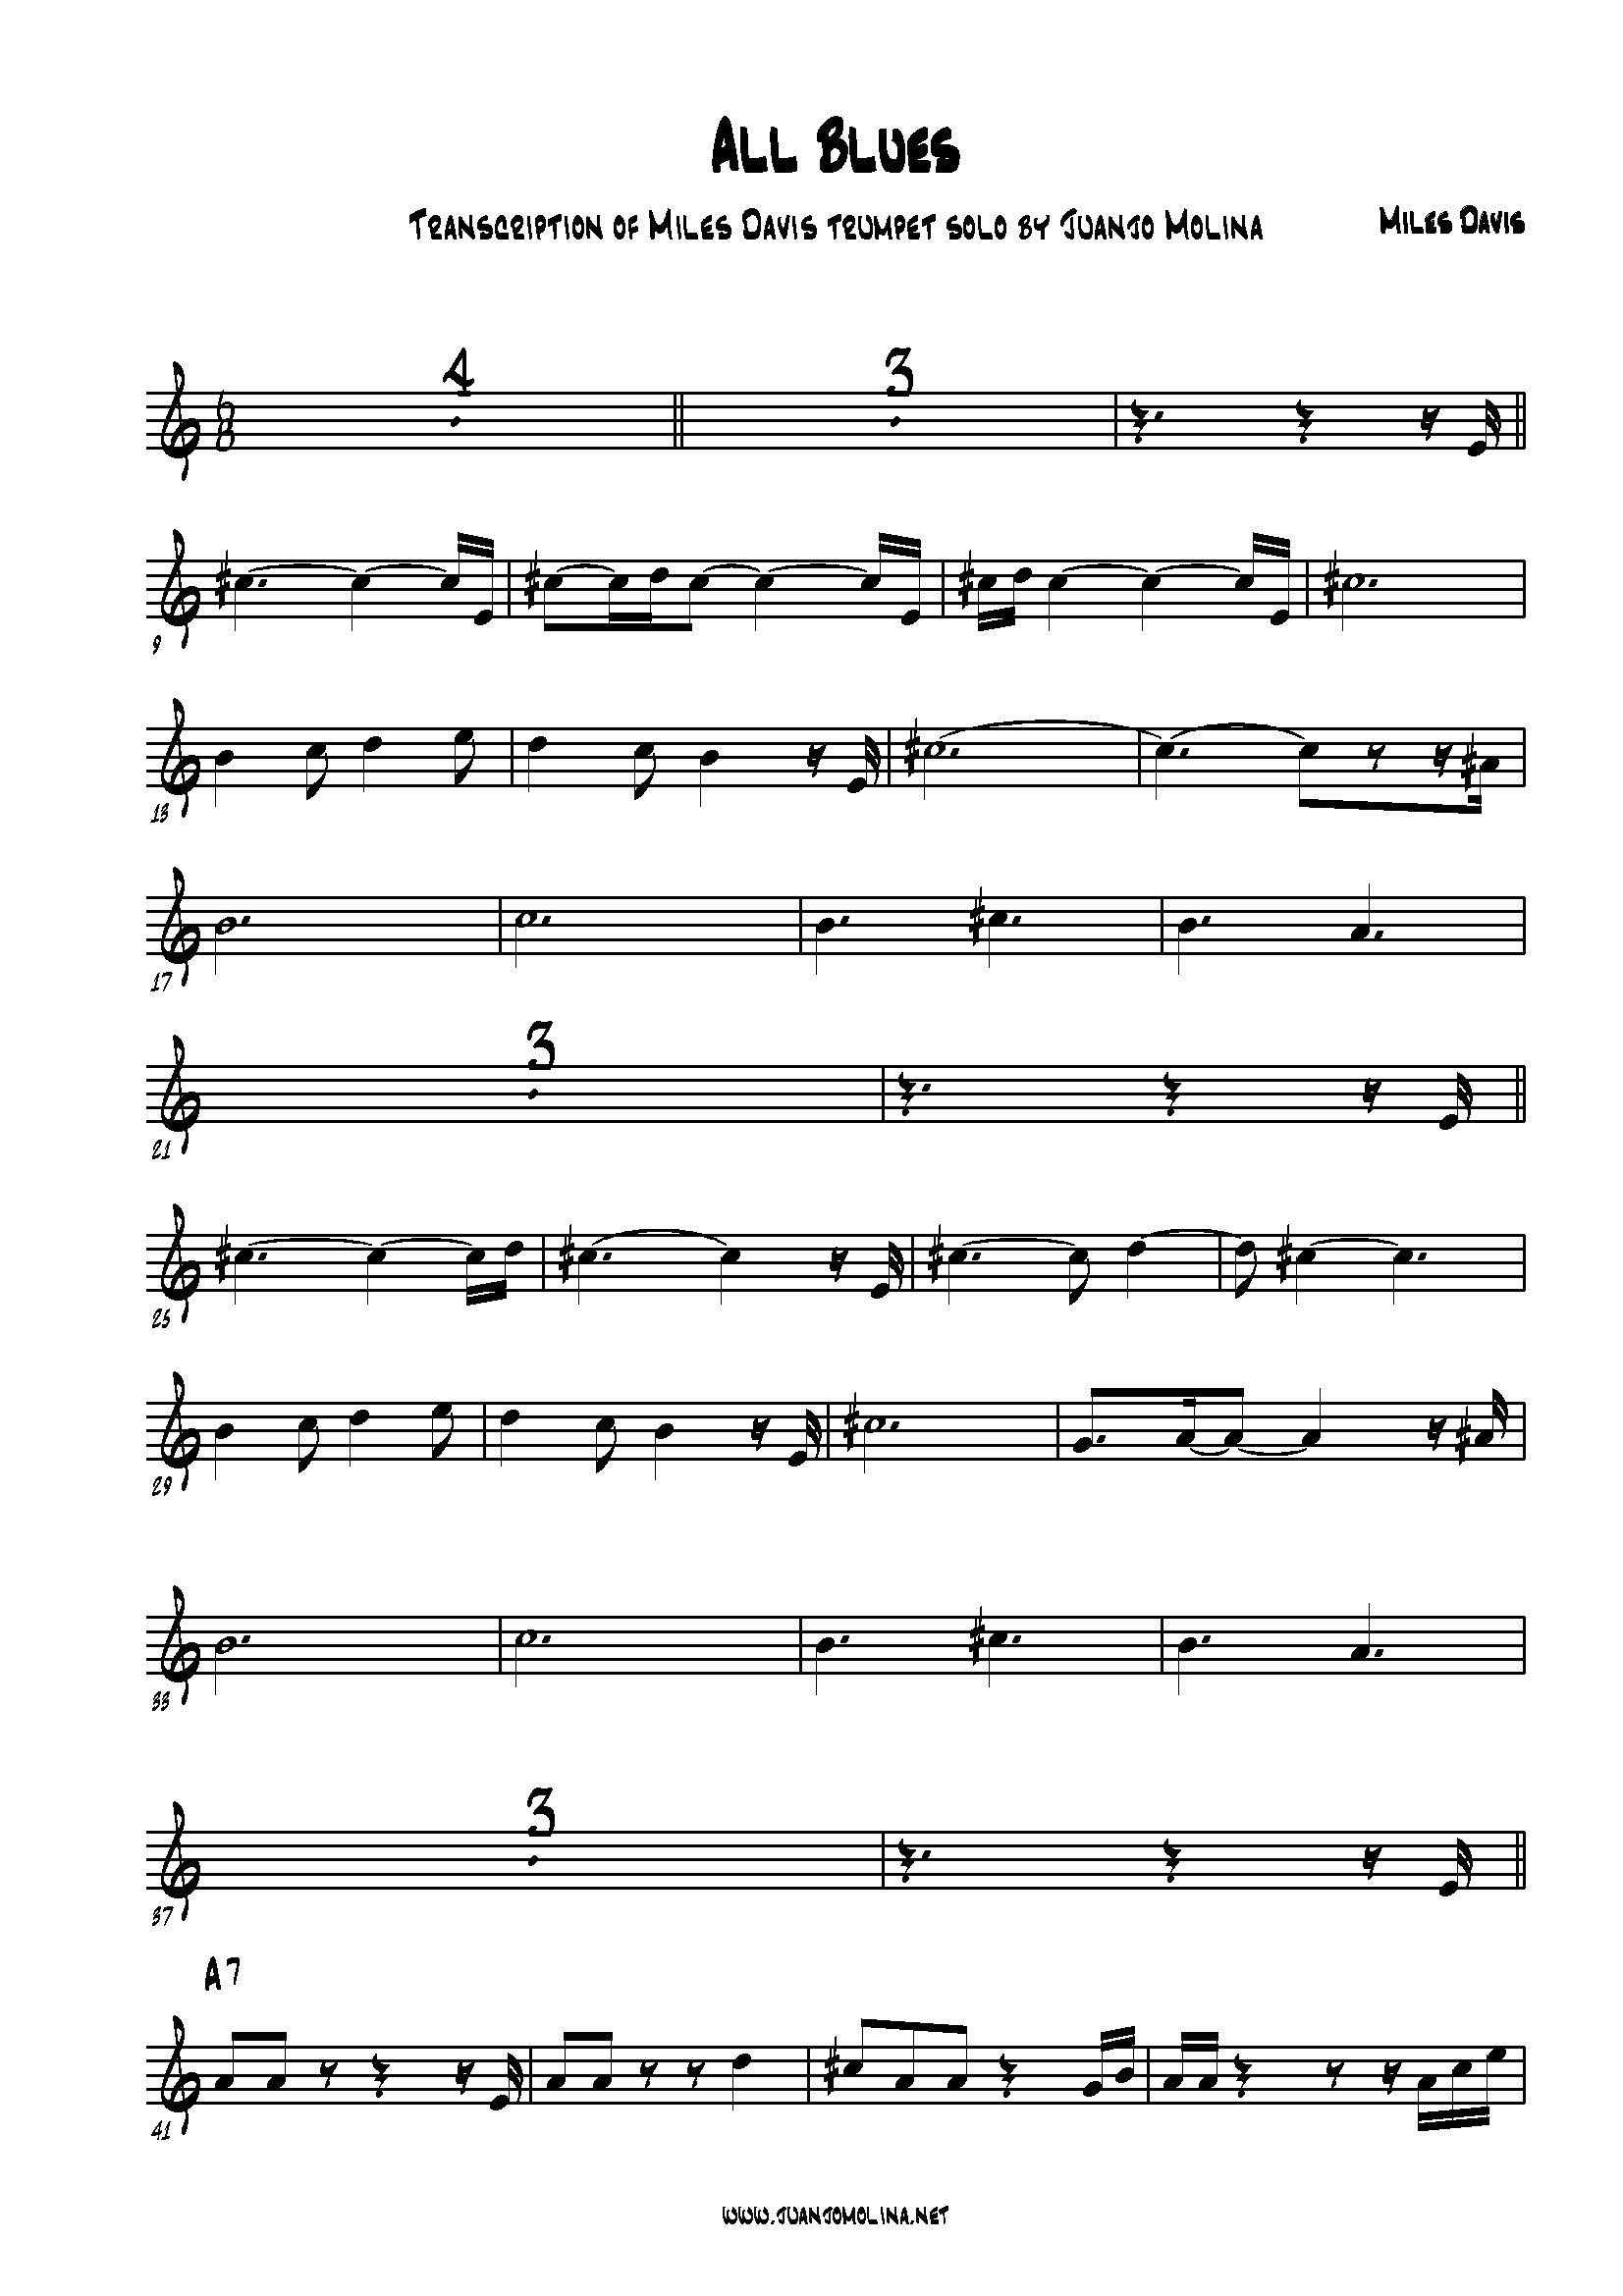 All Blues – Miles Davis trumpet solo transcription